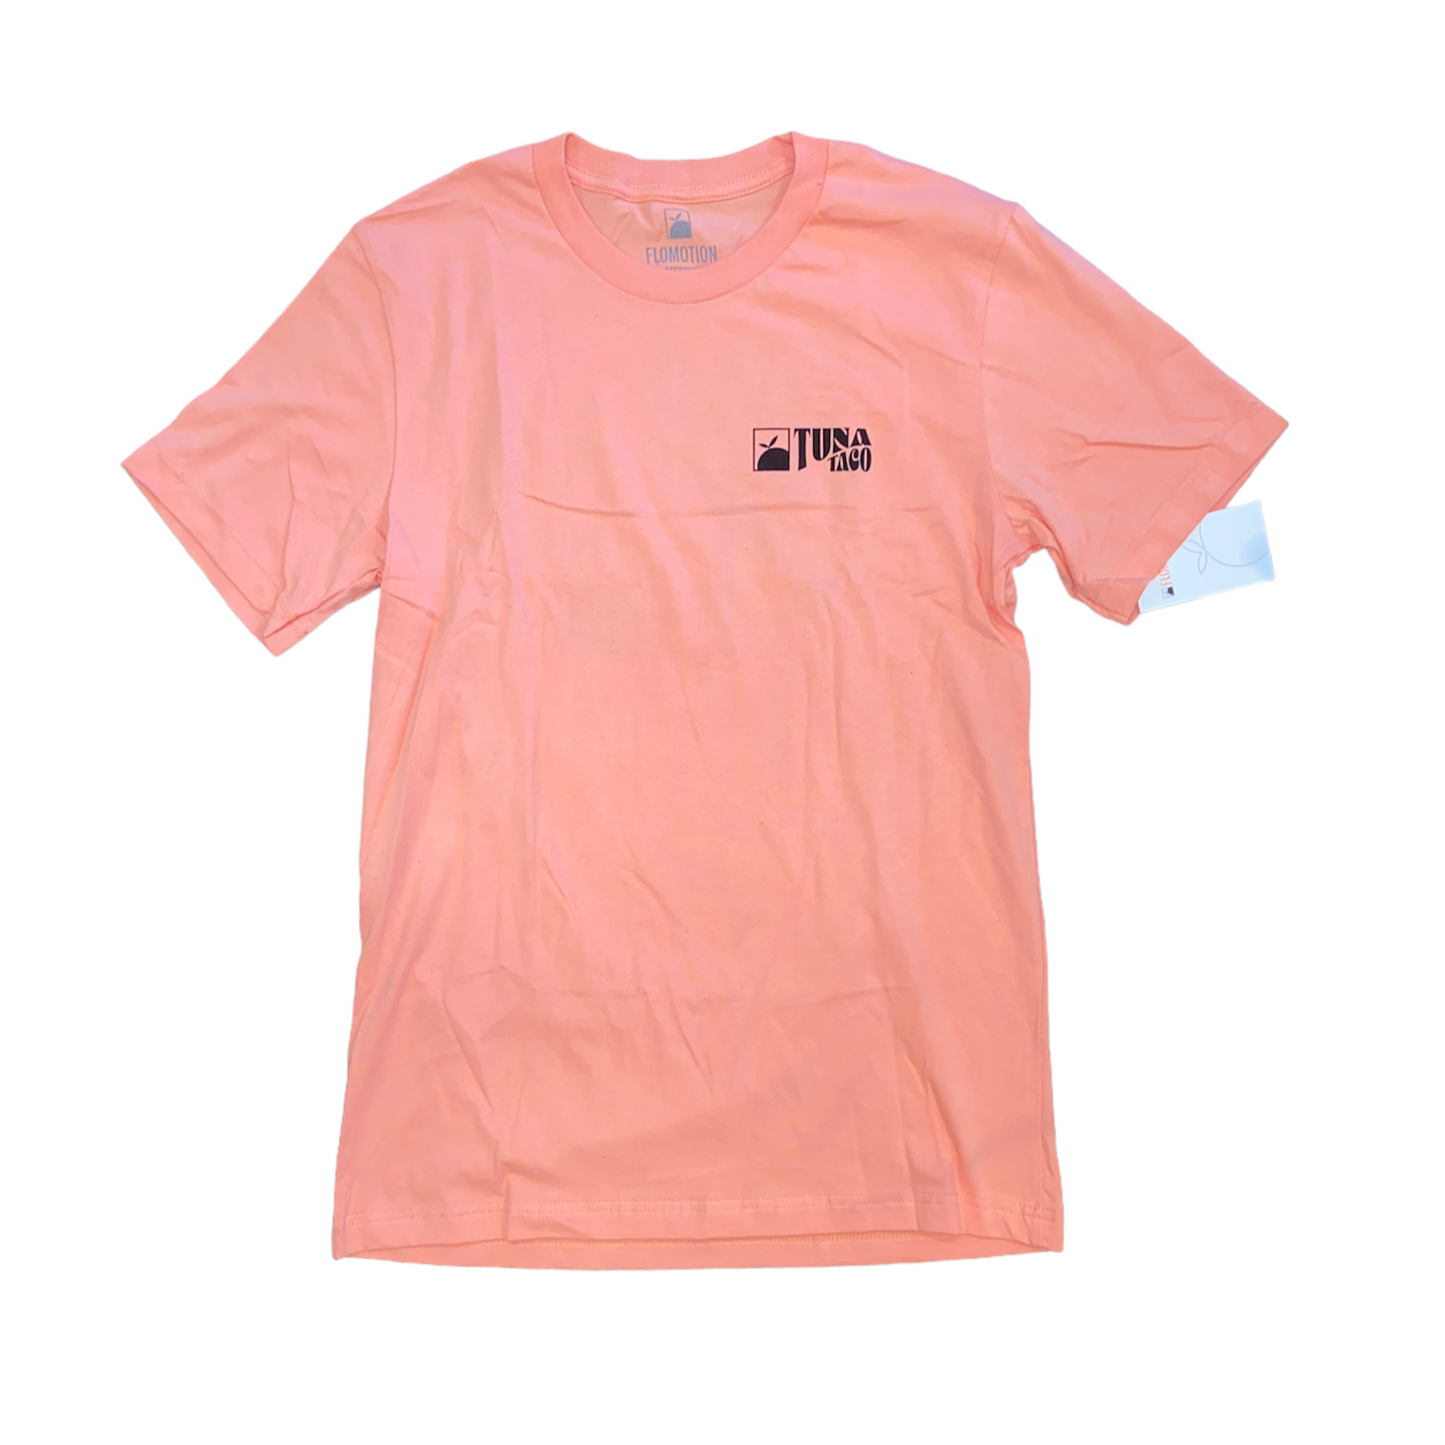 Flomotion Tuna Fish Taco Men's SS Tee - Pink Sunrise Mens T Shirt